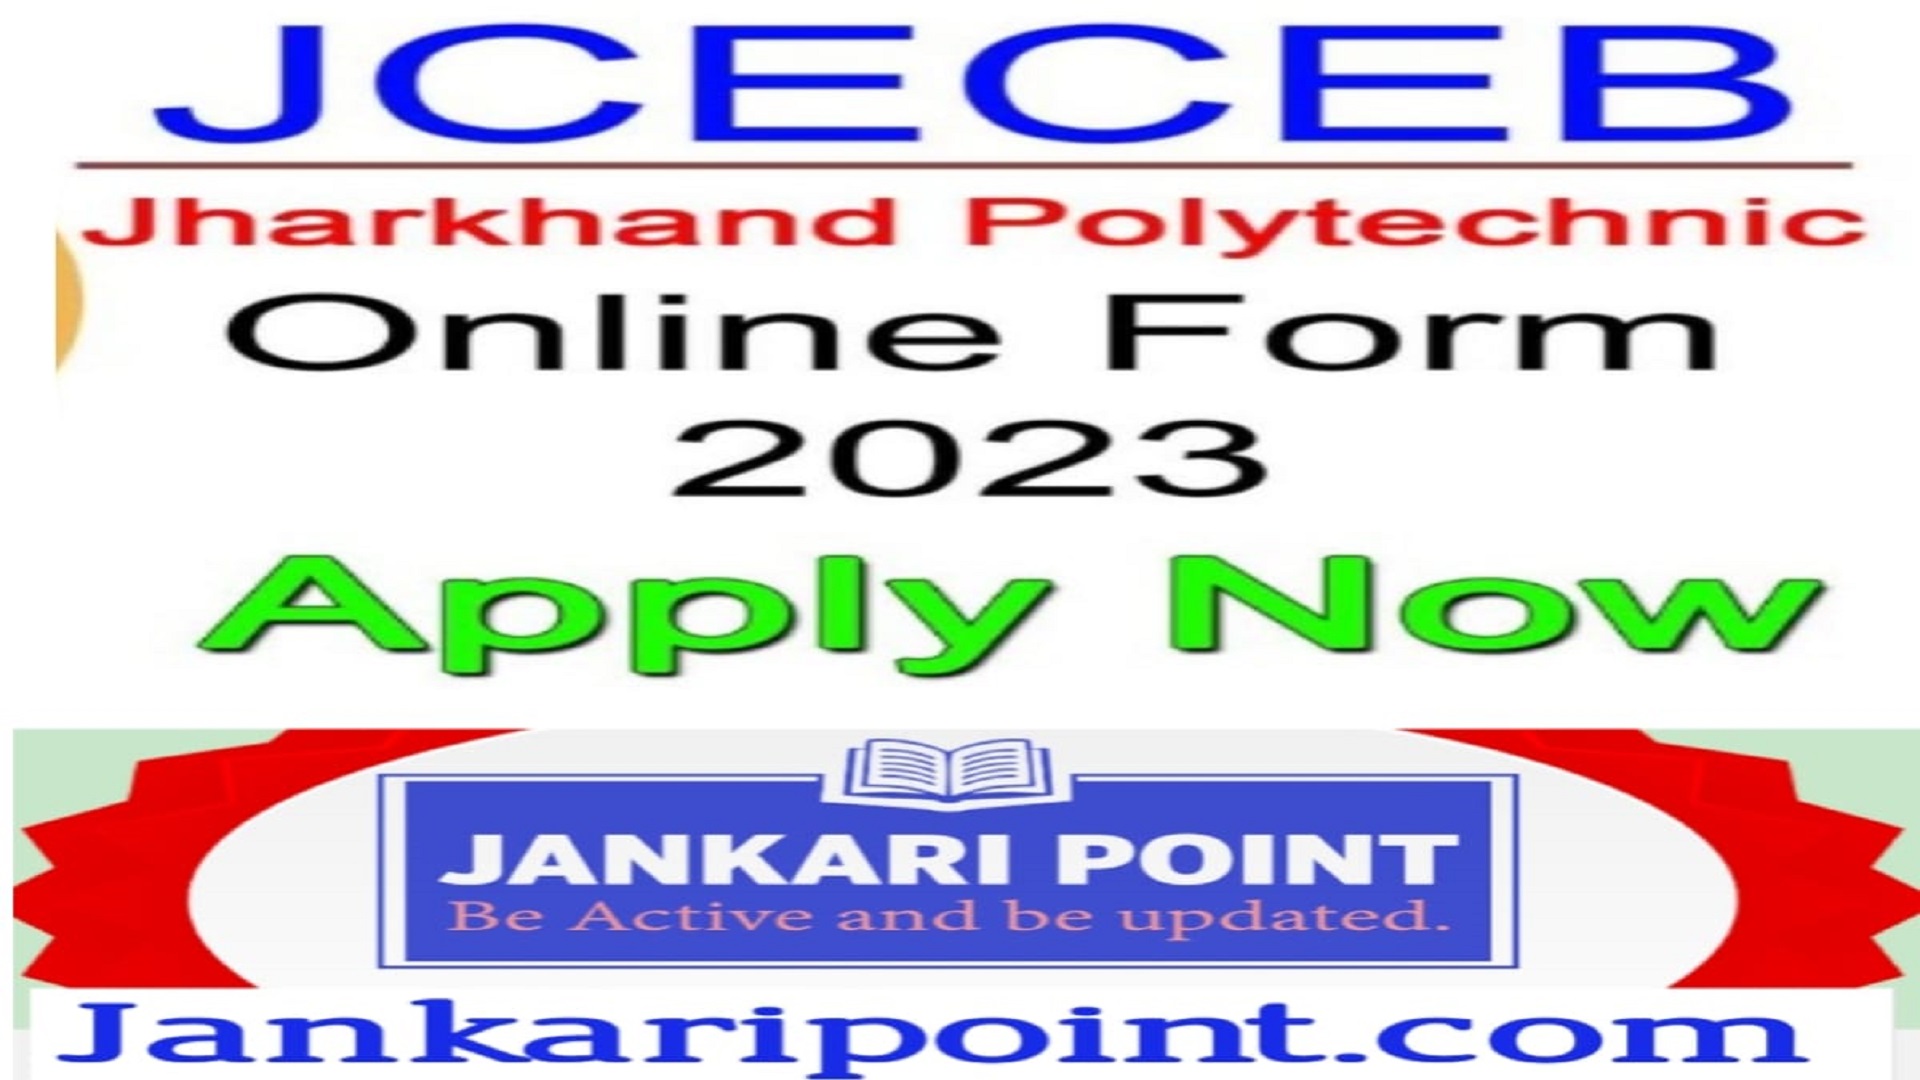 Jharkhand Polytechnic Online Form 2023